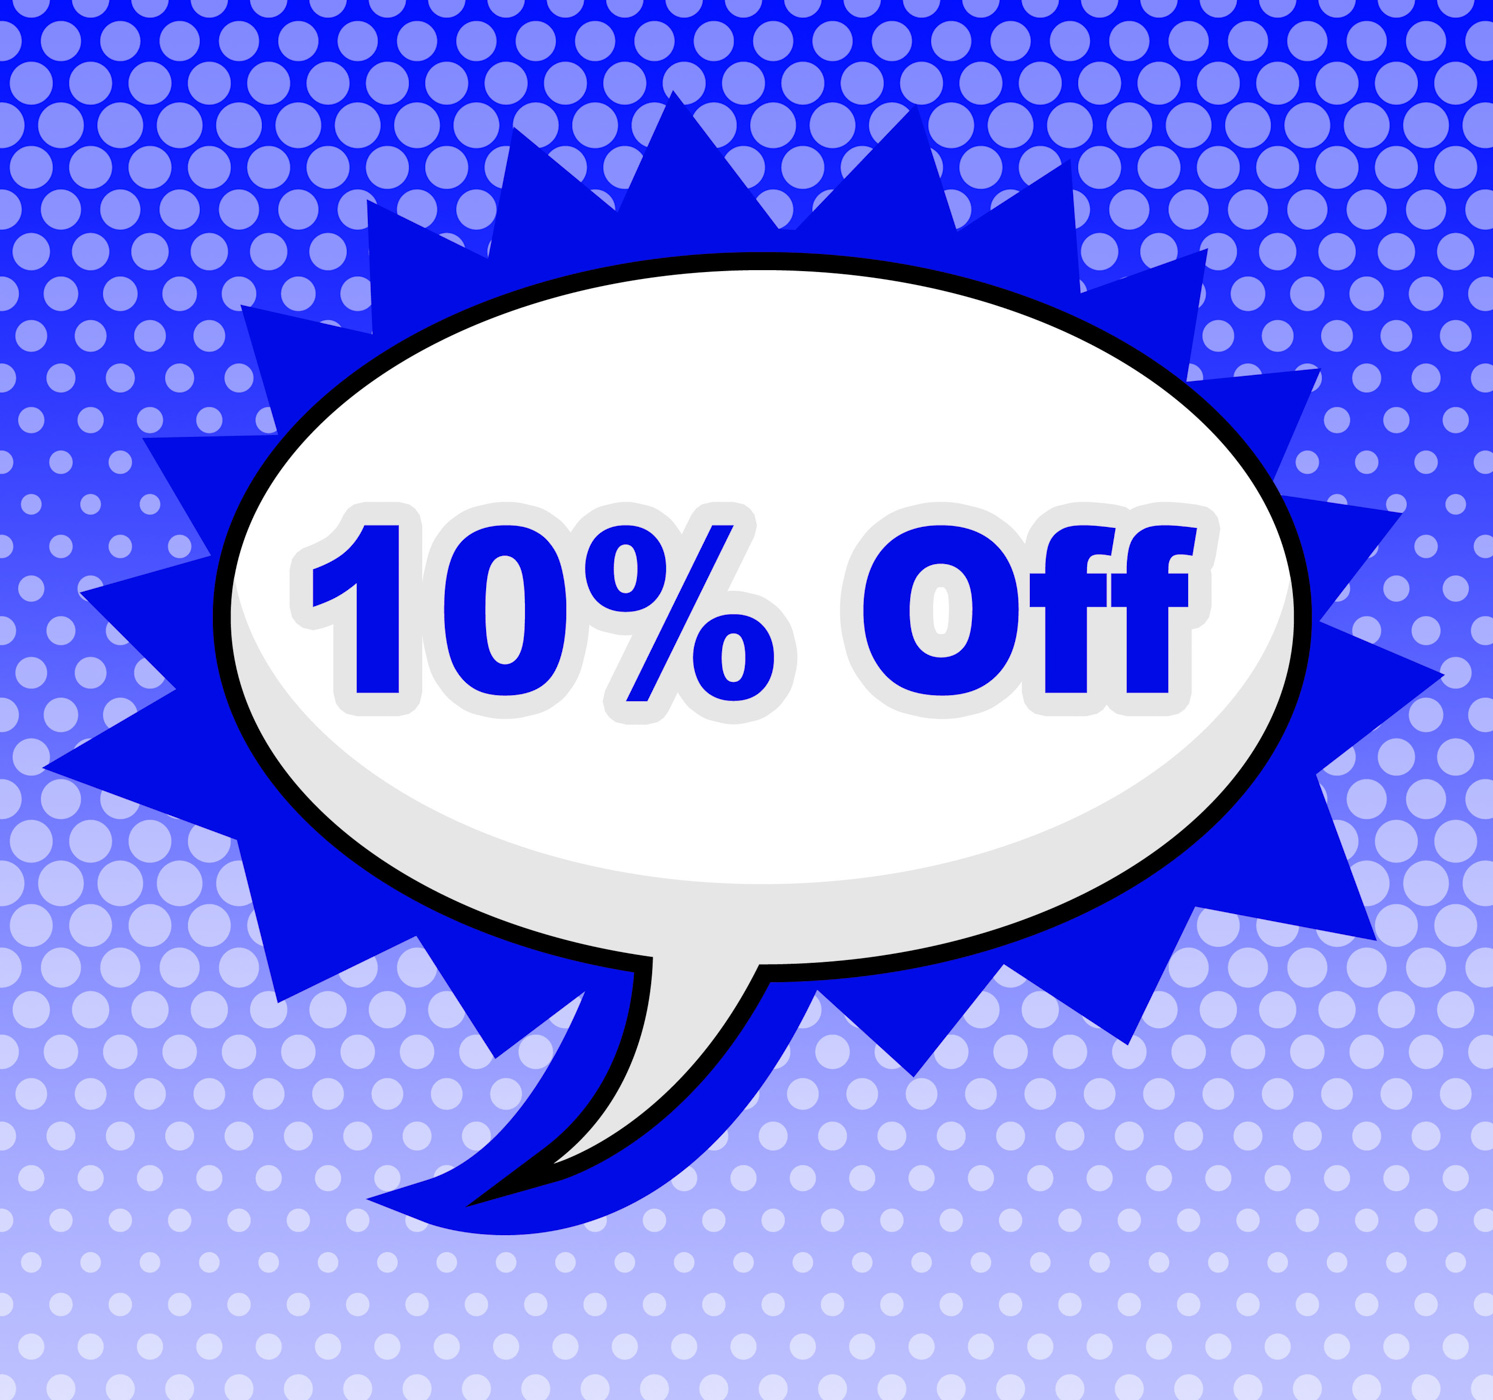 Ten percent off represents closeout discounts and message photo